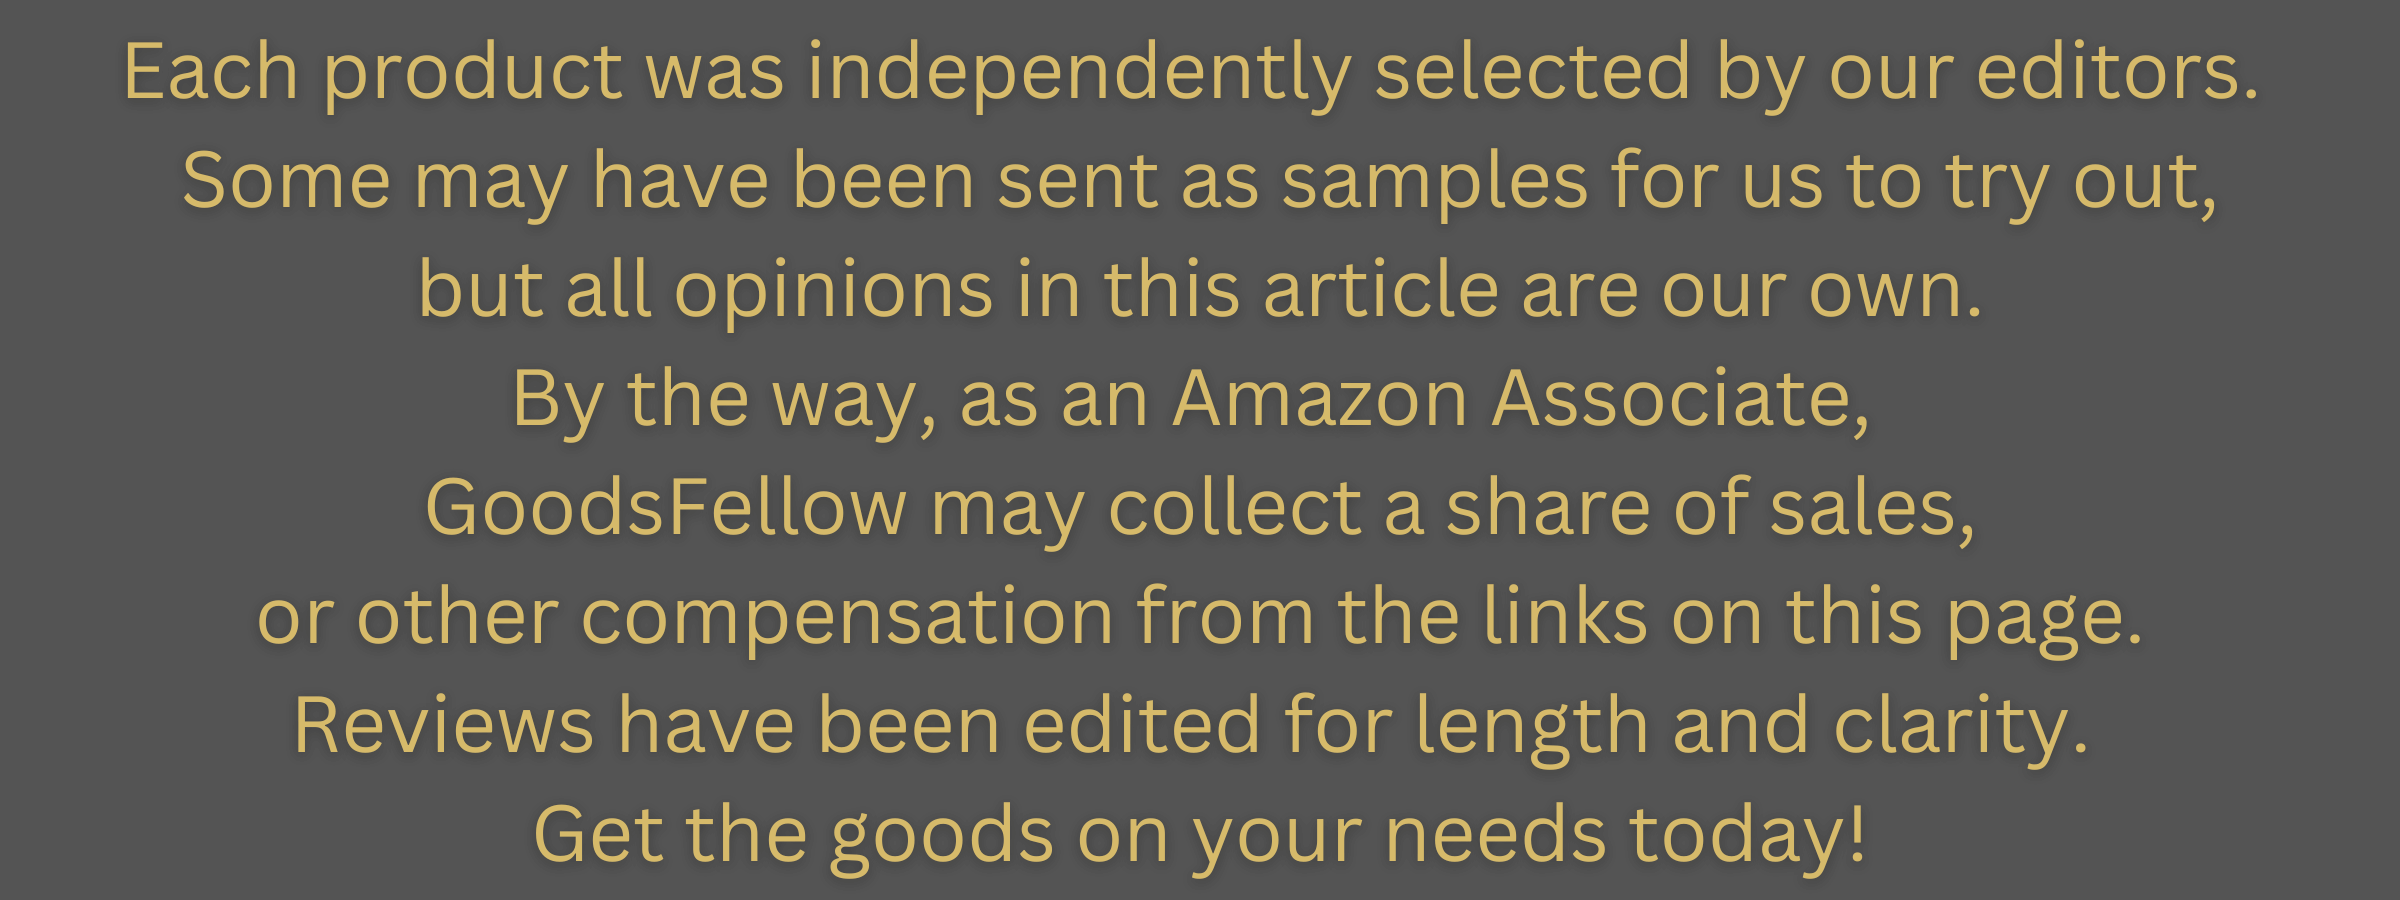 Amazon Affiliates Commission Disclosure